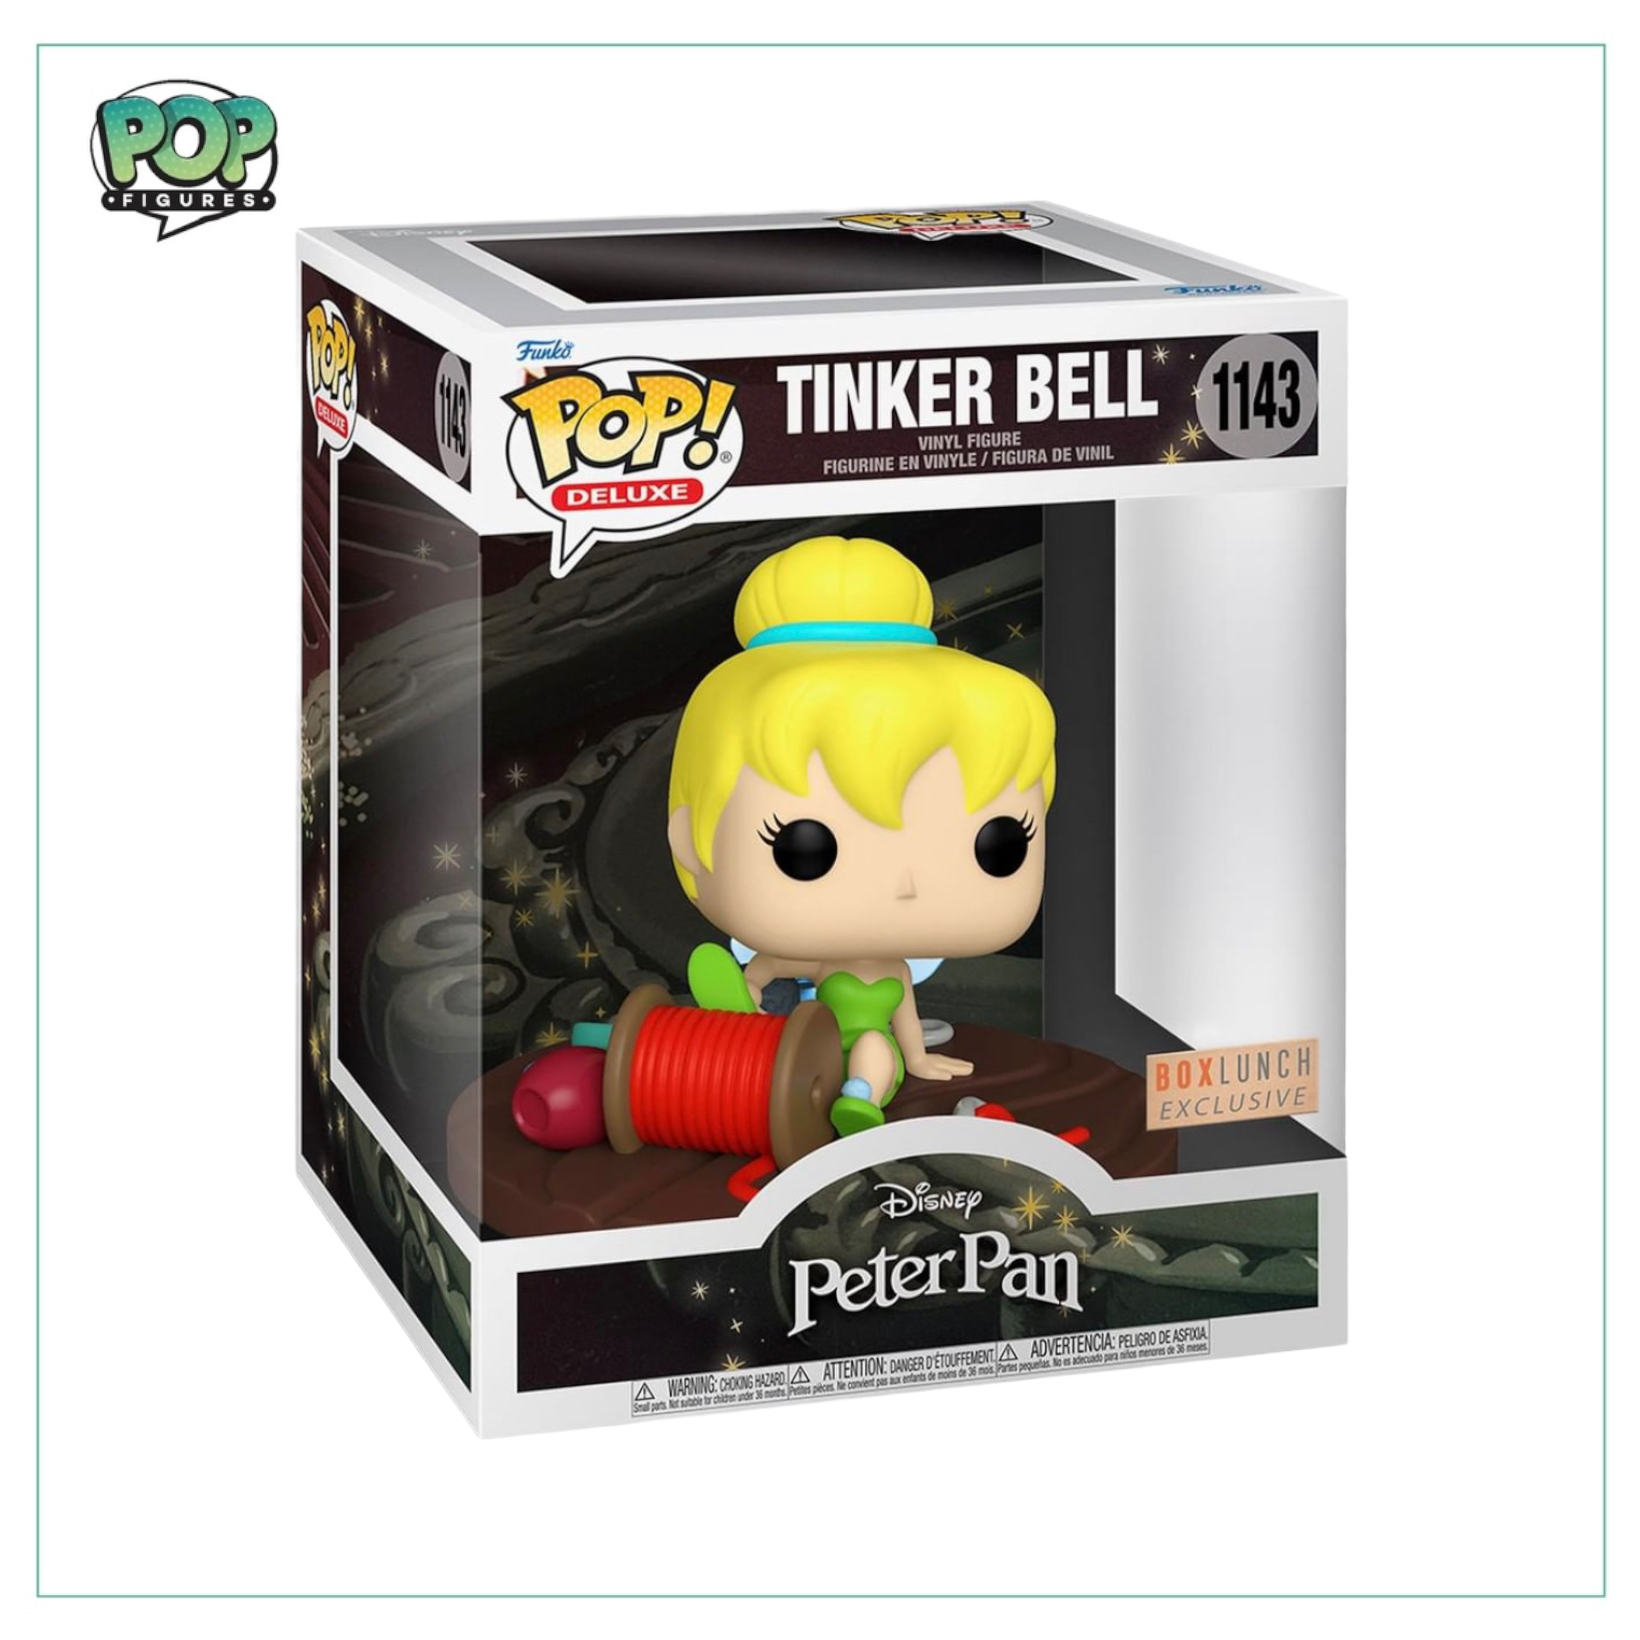 Tinker bell #1143 Deluxe Funko Pop! - Peter Pan - Box Lunch Exclusive